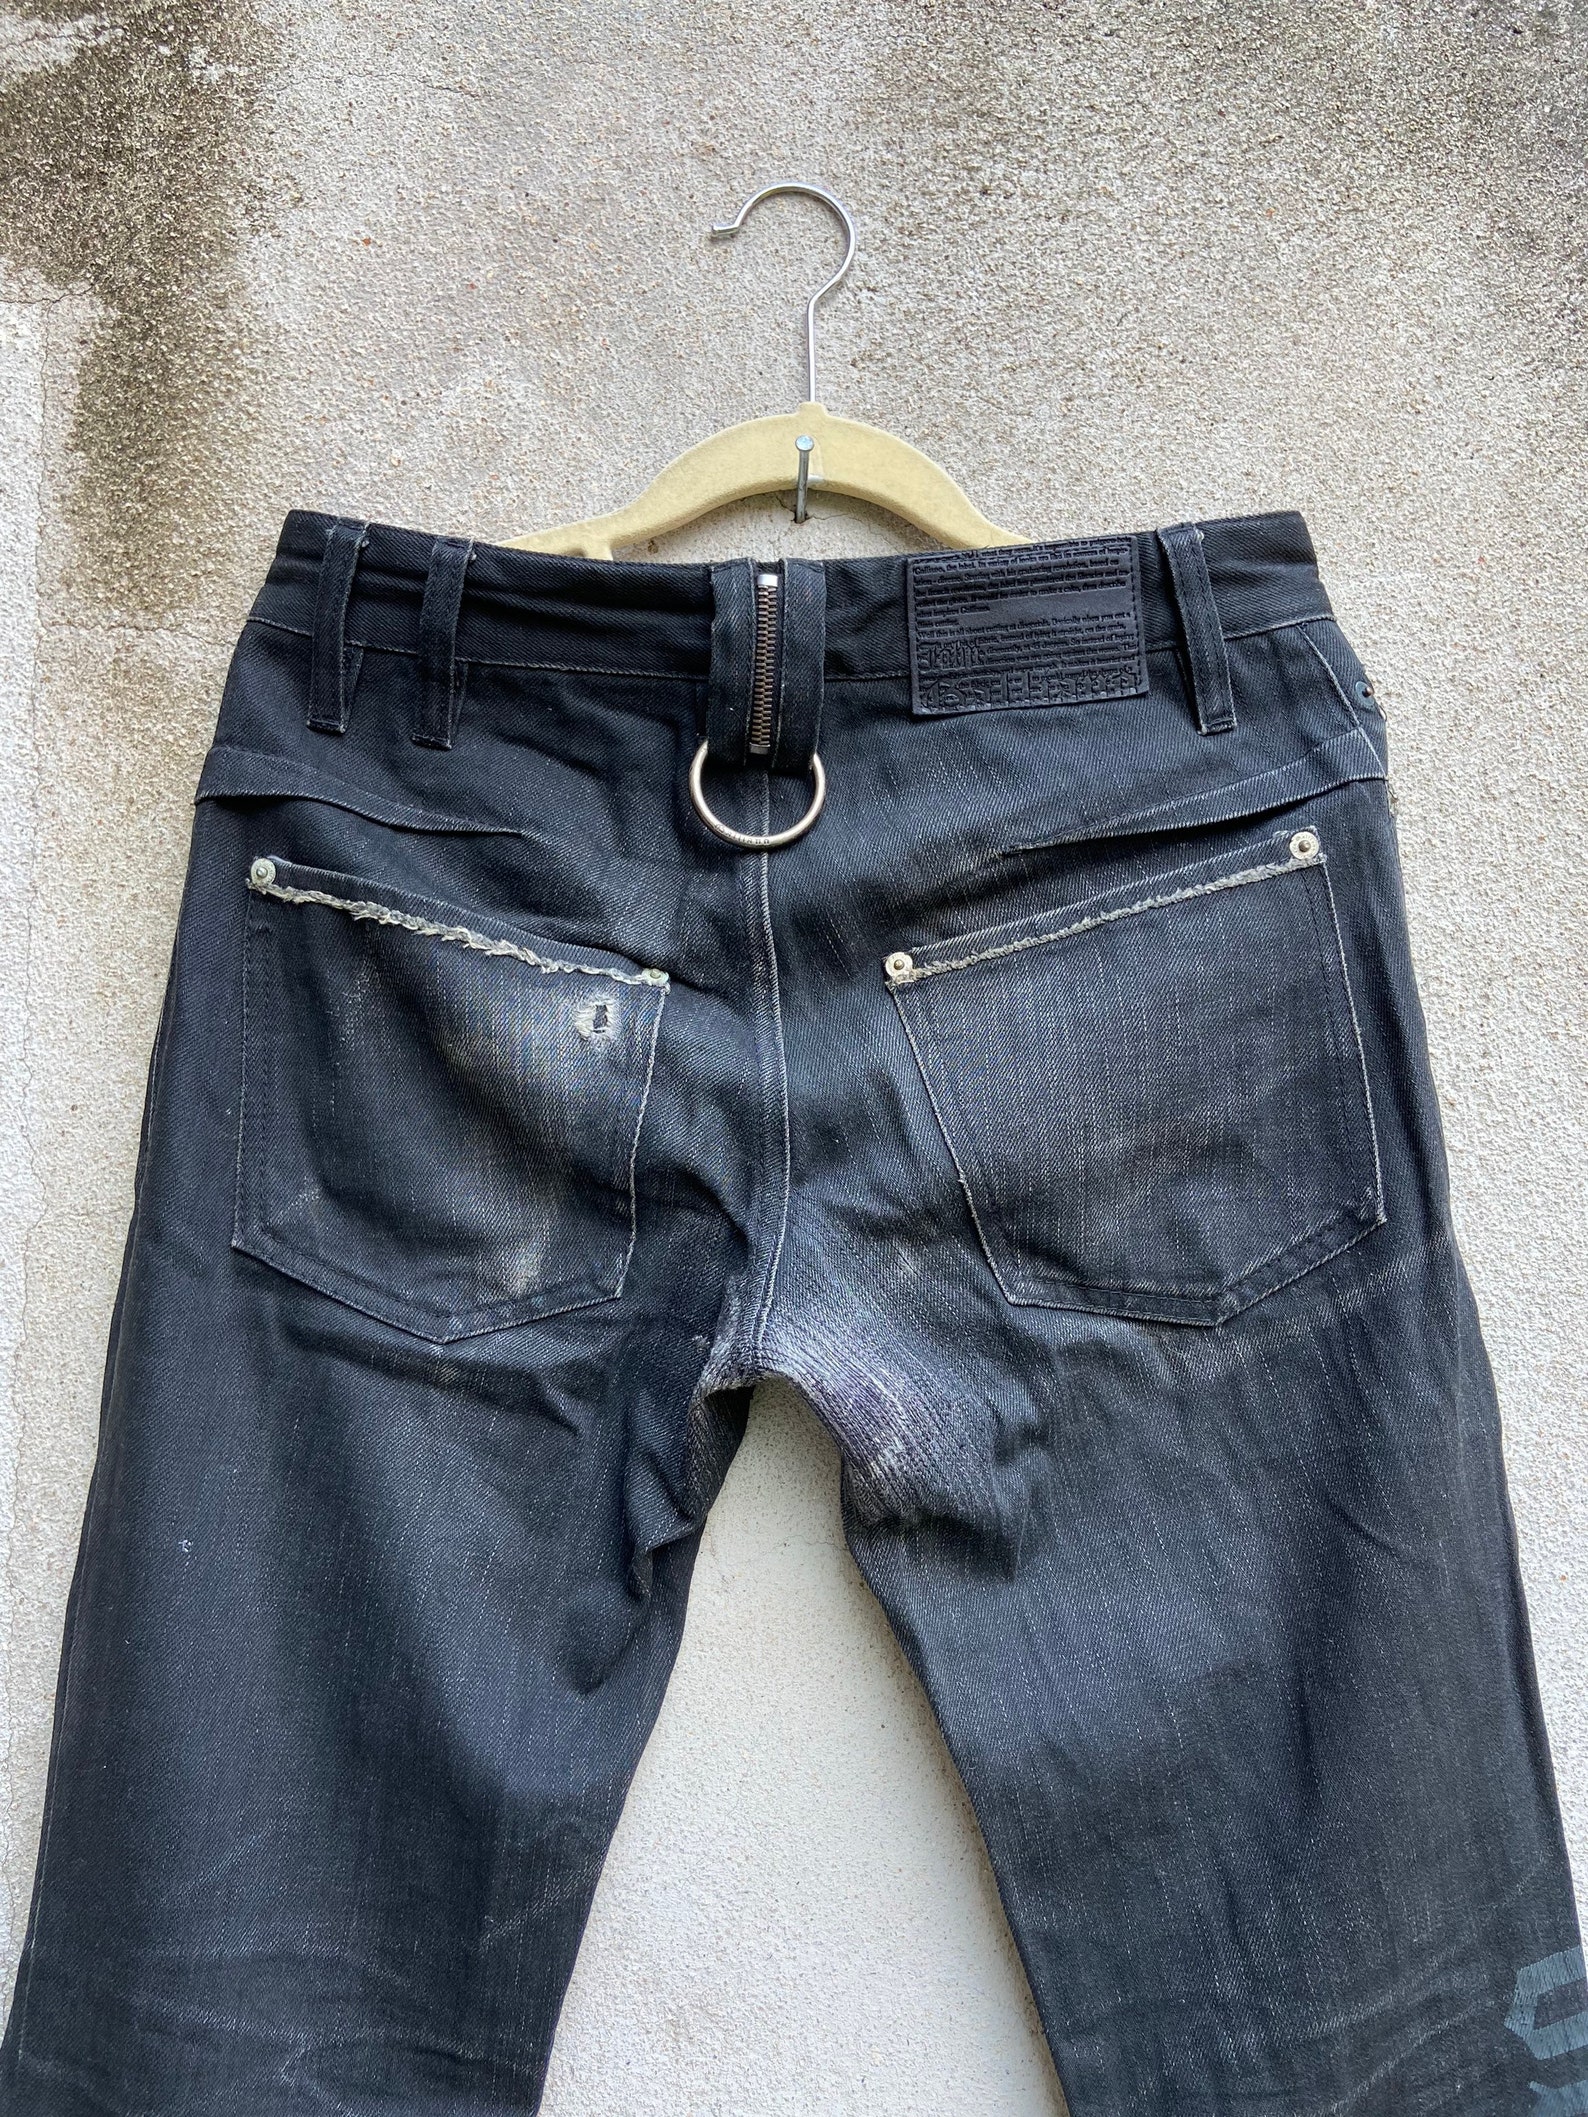 John Galliano Jeans Dior Black denim distressed Pants Made in | Etsy